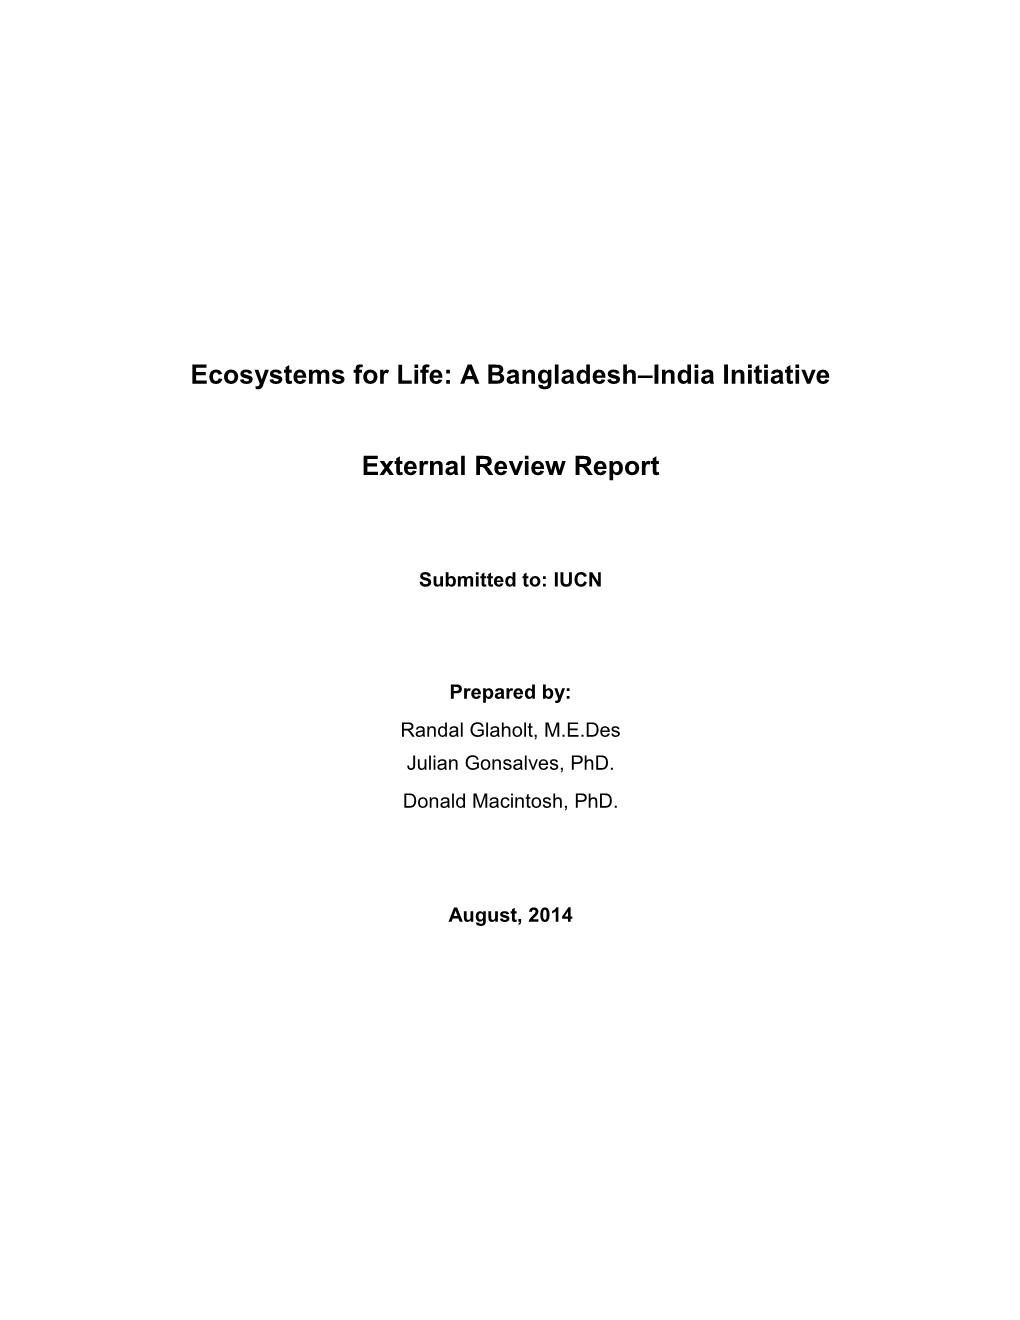 Ecosystems for Life: a Bangladesh-India